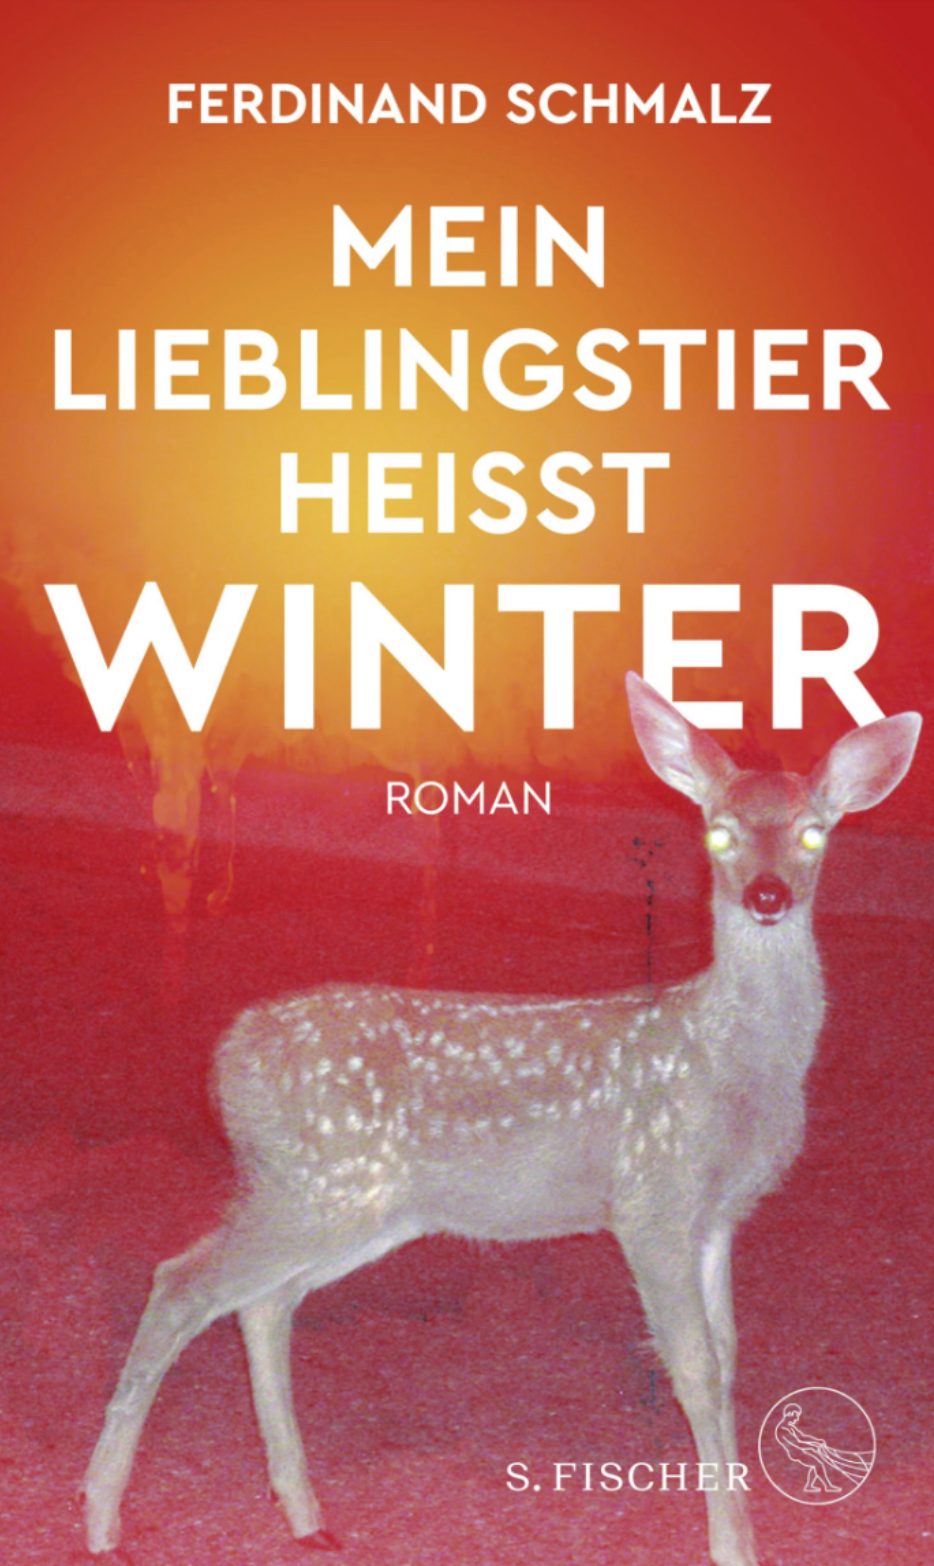 Translation: My Favorite Animal is Winter